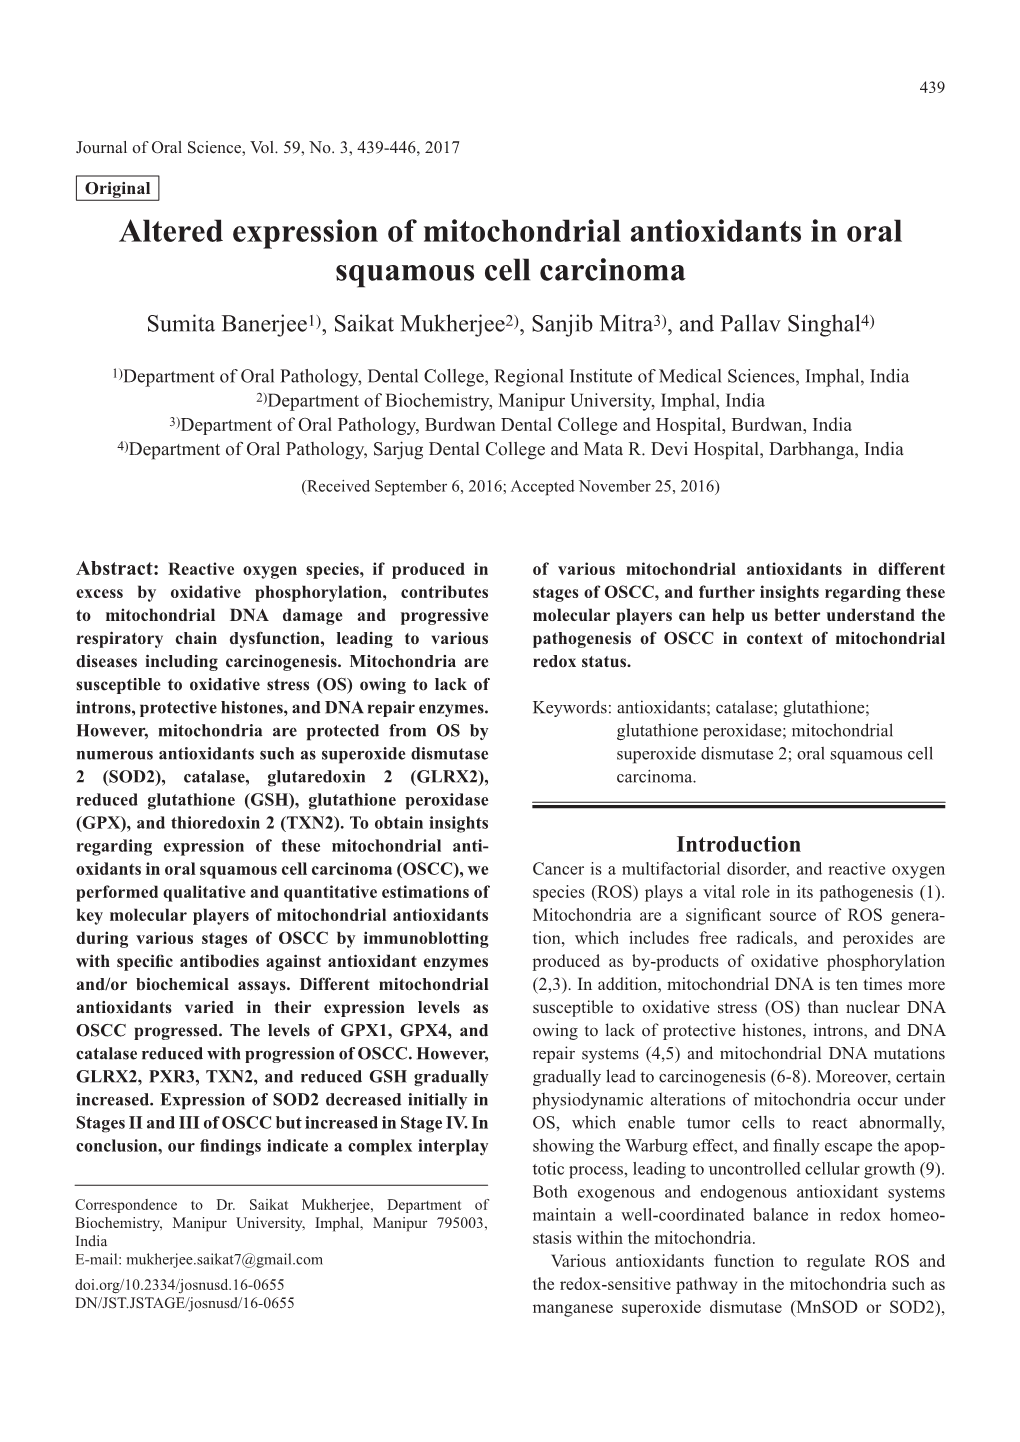 Altered Expression of Mitochondrial Antioxidants in Oral Squamous Cell Carcinoma Sumita Banerjee1), Saikat Mukherjee2), Sanjib Mitra3), and Pallav Singhal4)